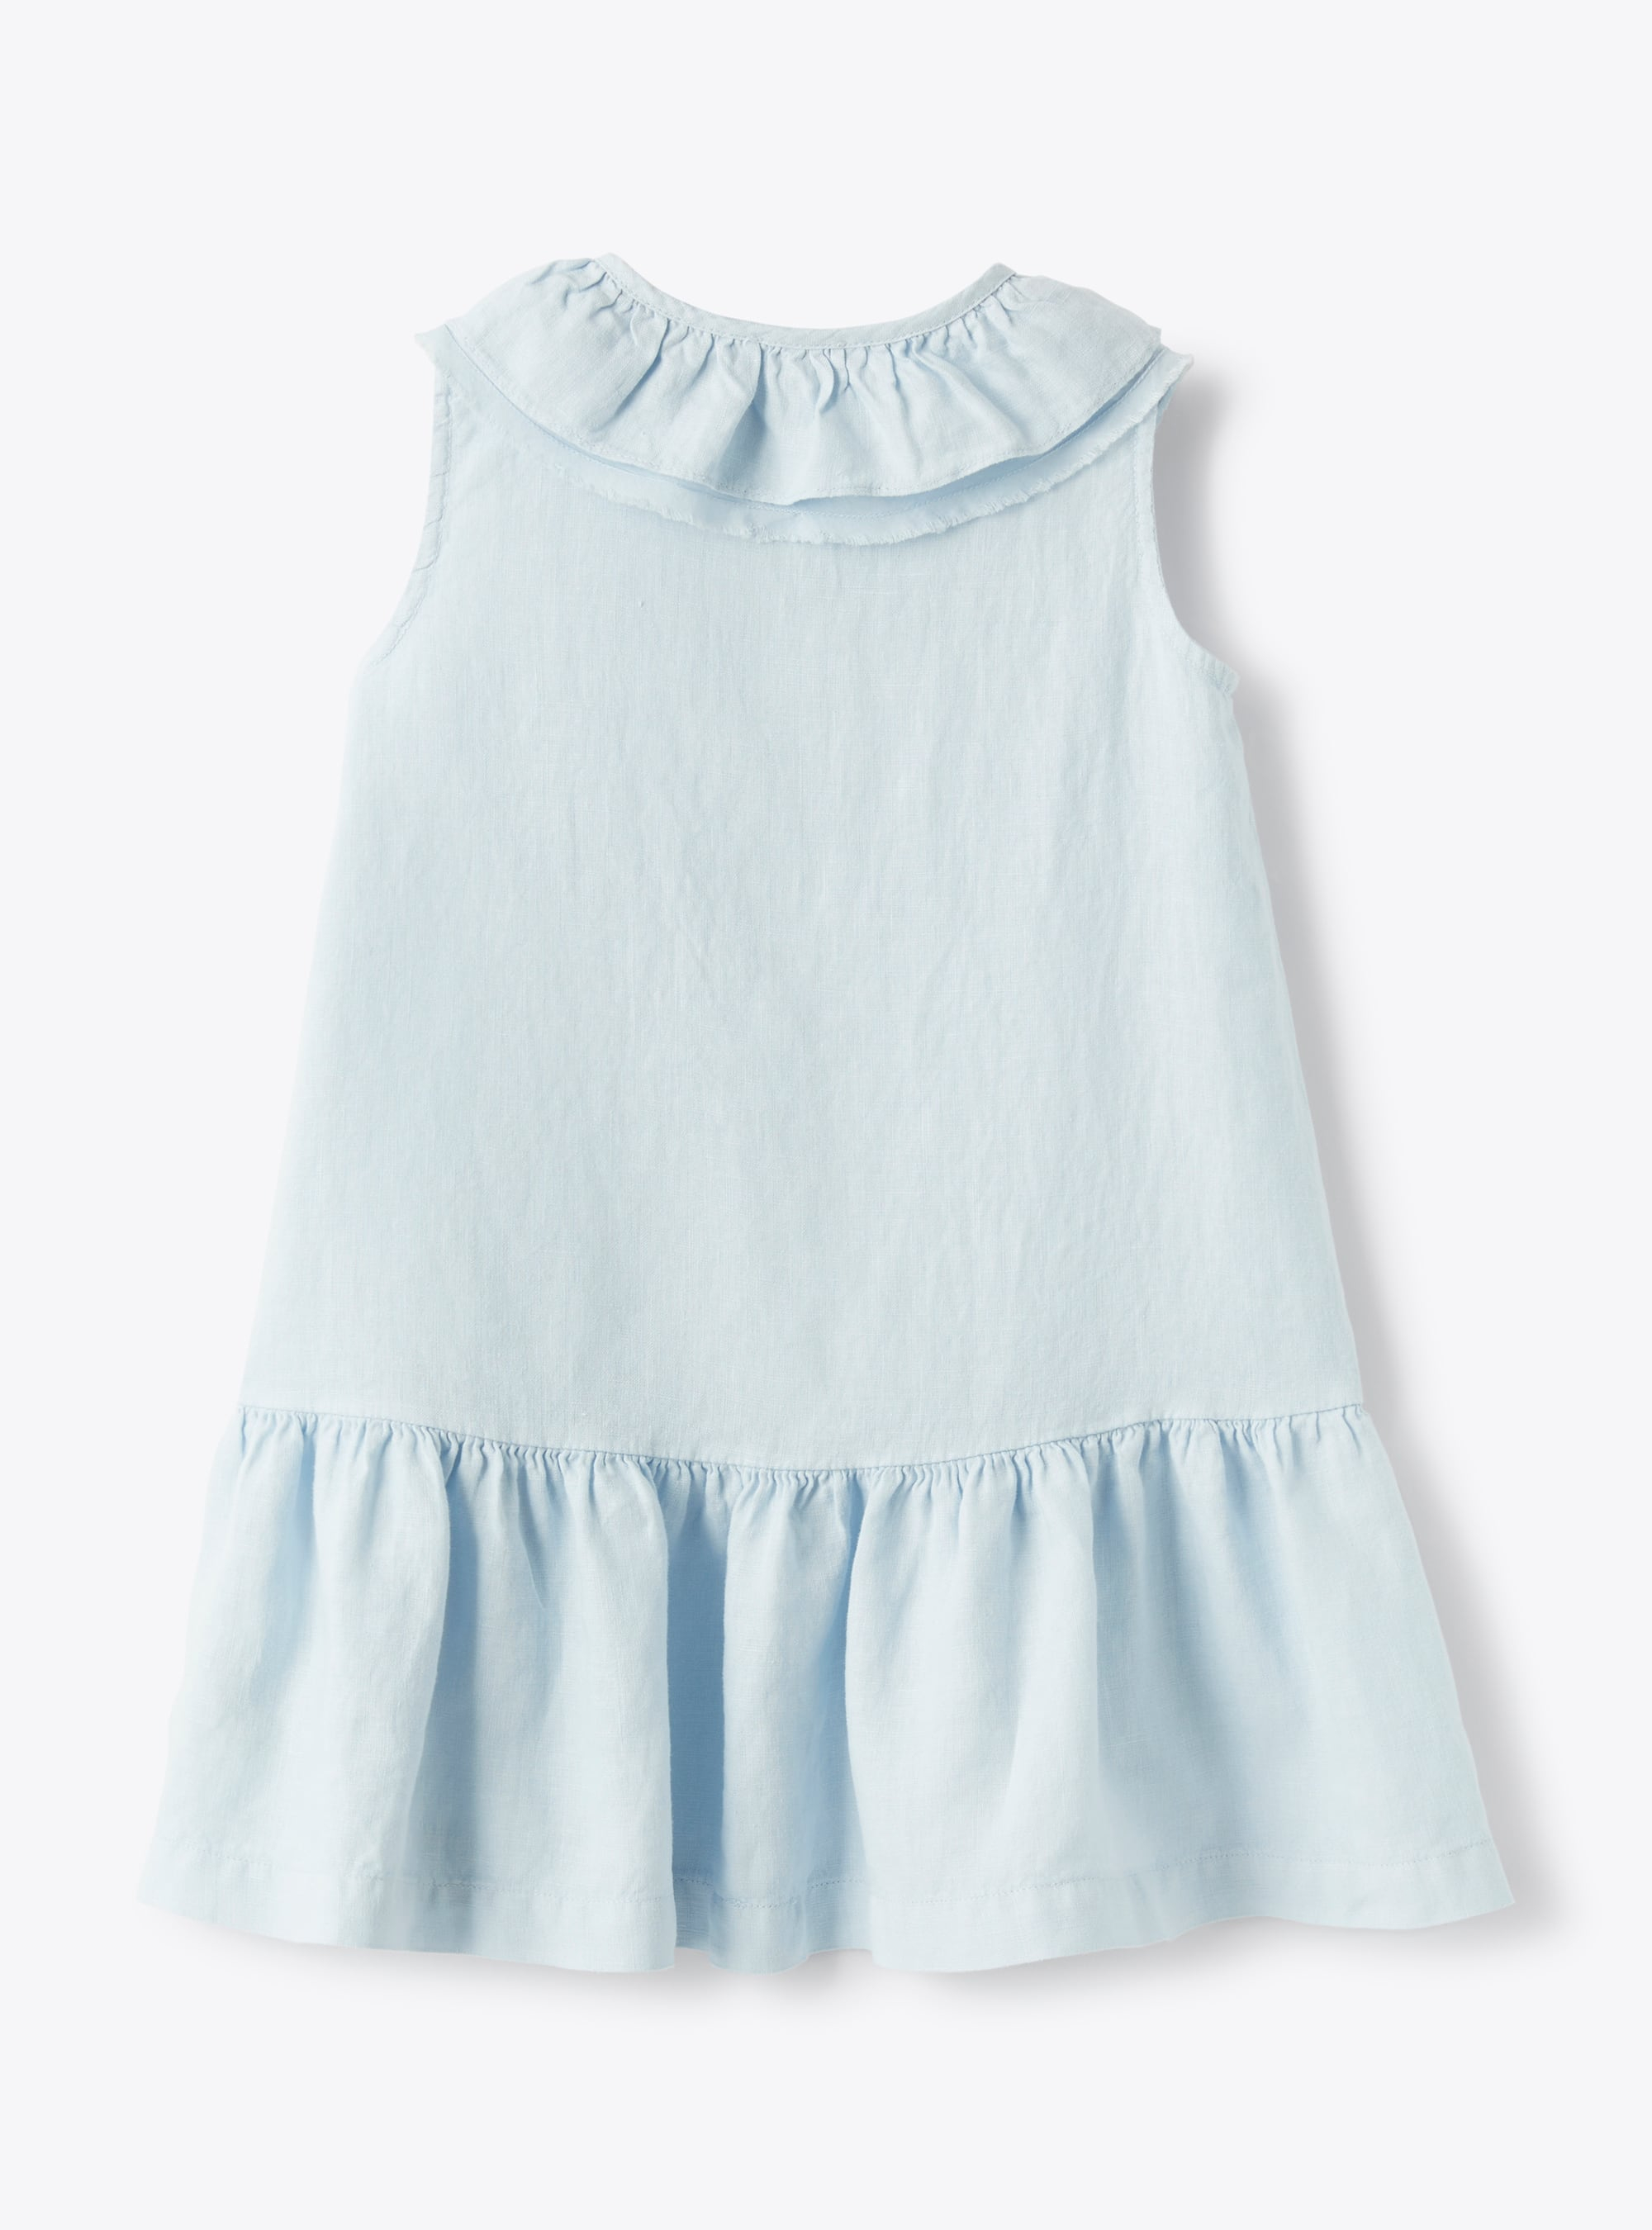 Льняное платье бледно-василькового цвета с оборками на горловине - Светло-синий | Il Gufo